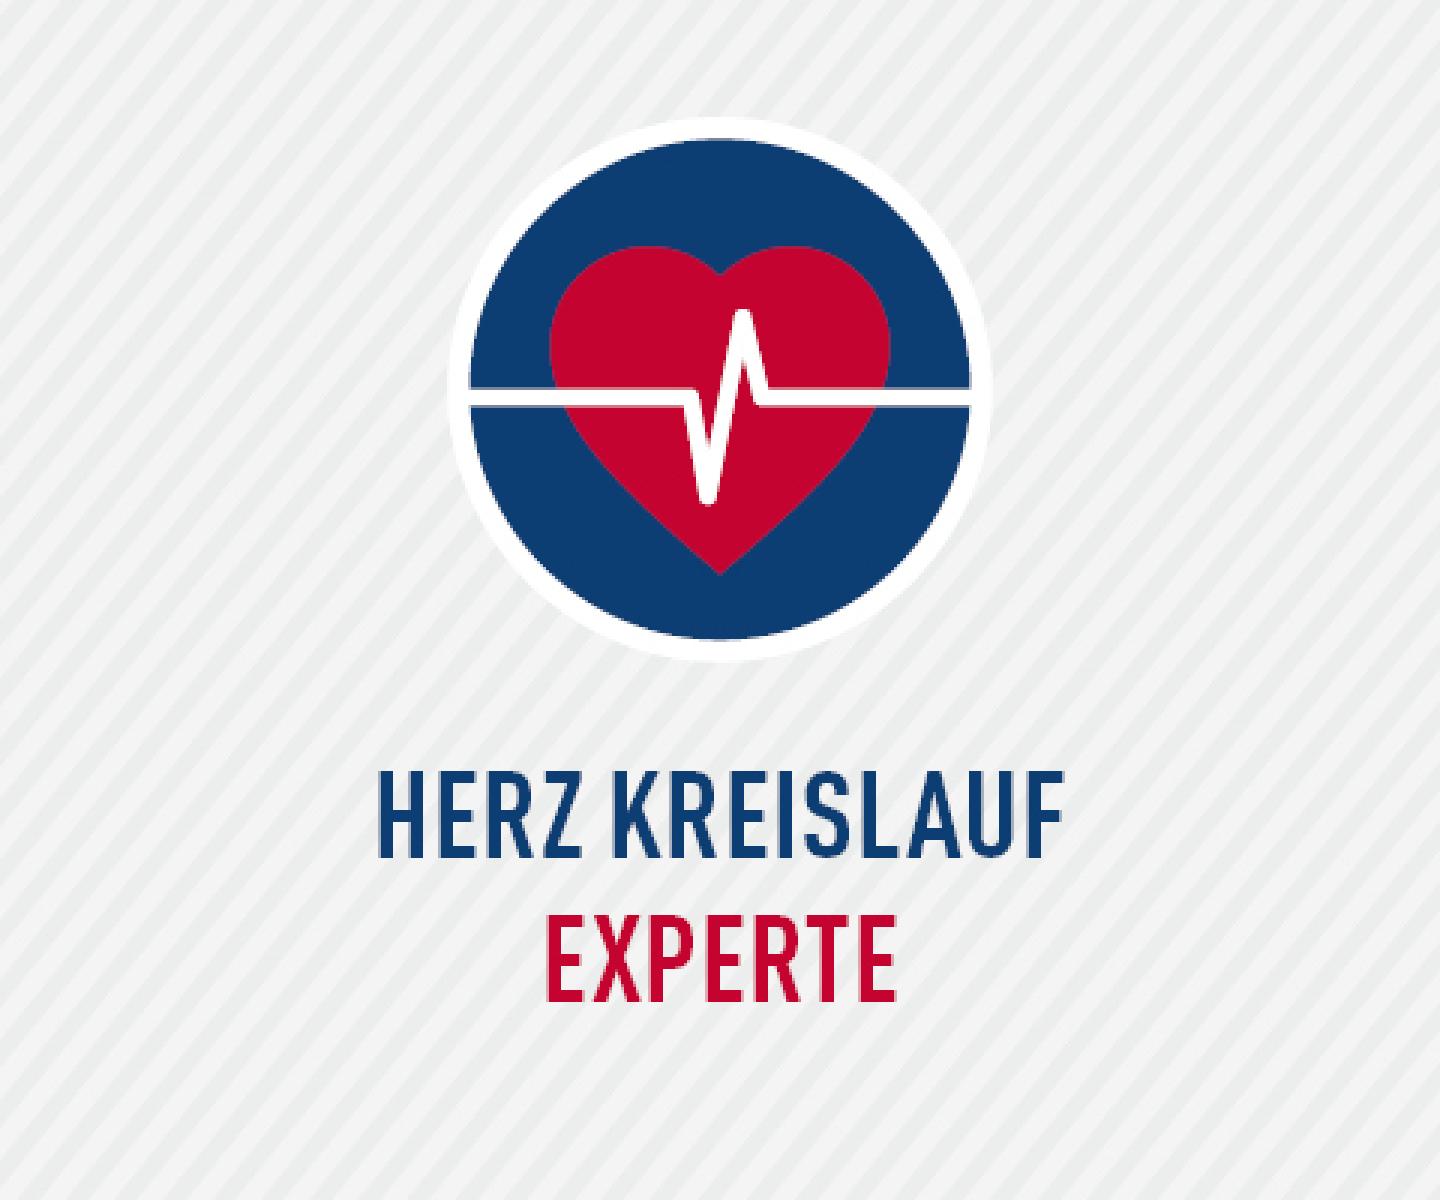 Website herzkreislaufexperte.de